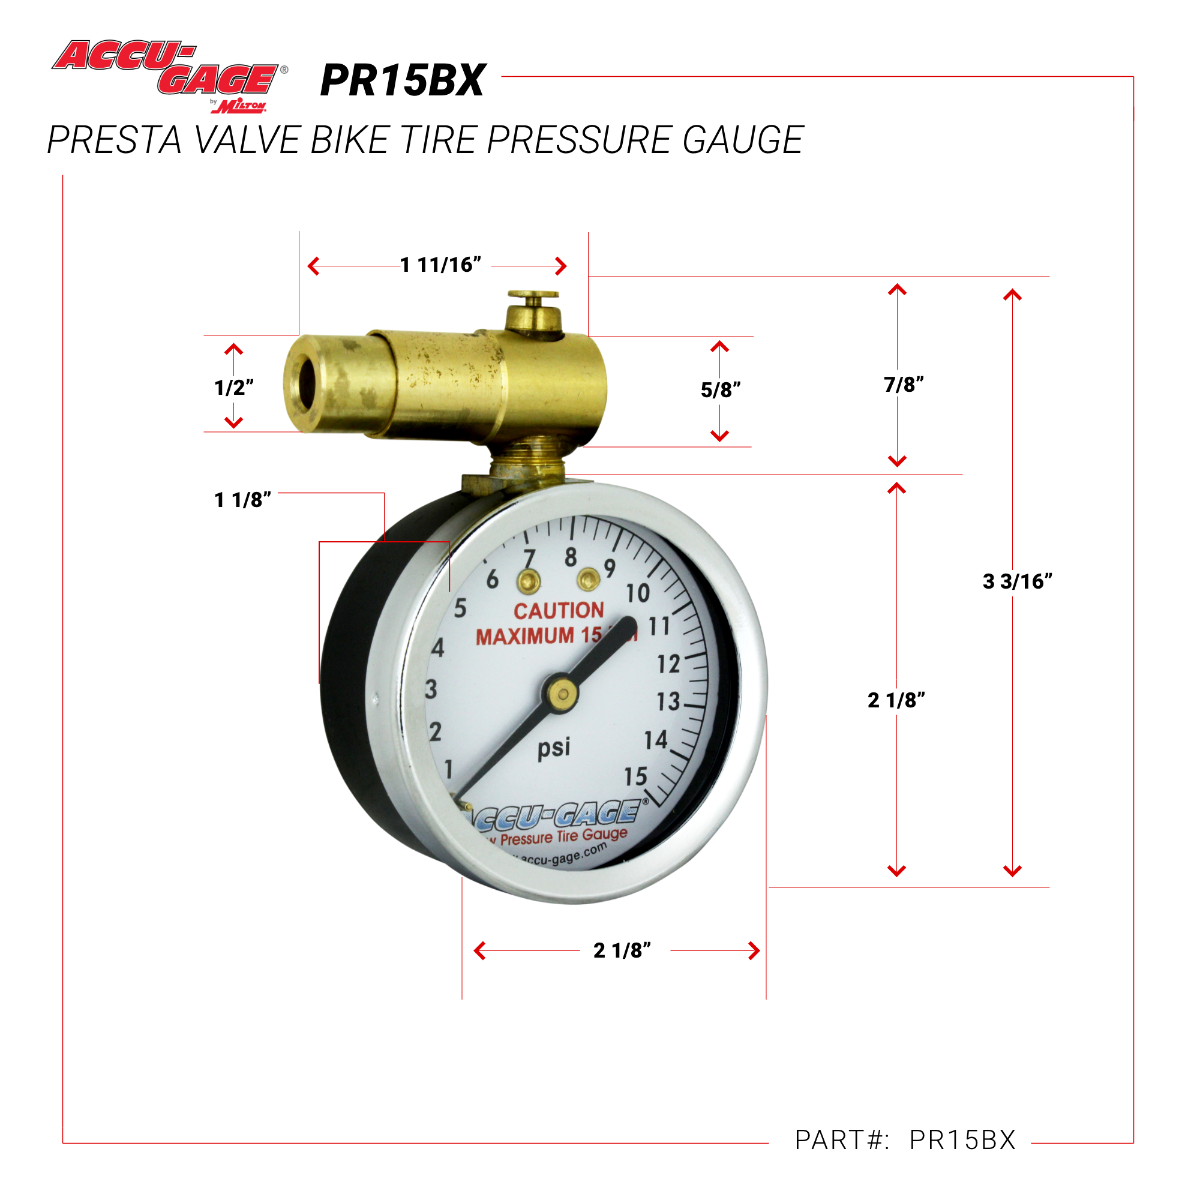 ACCU-GAGE® by Milton® Presta Valve Bike Tire Pressure Gauge with Bleeder Valve, for 0-15 PSI - ANSI Certified